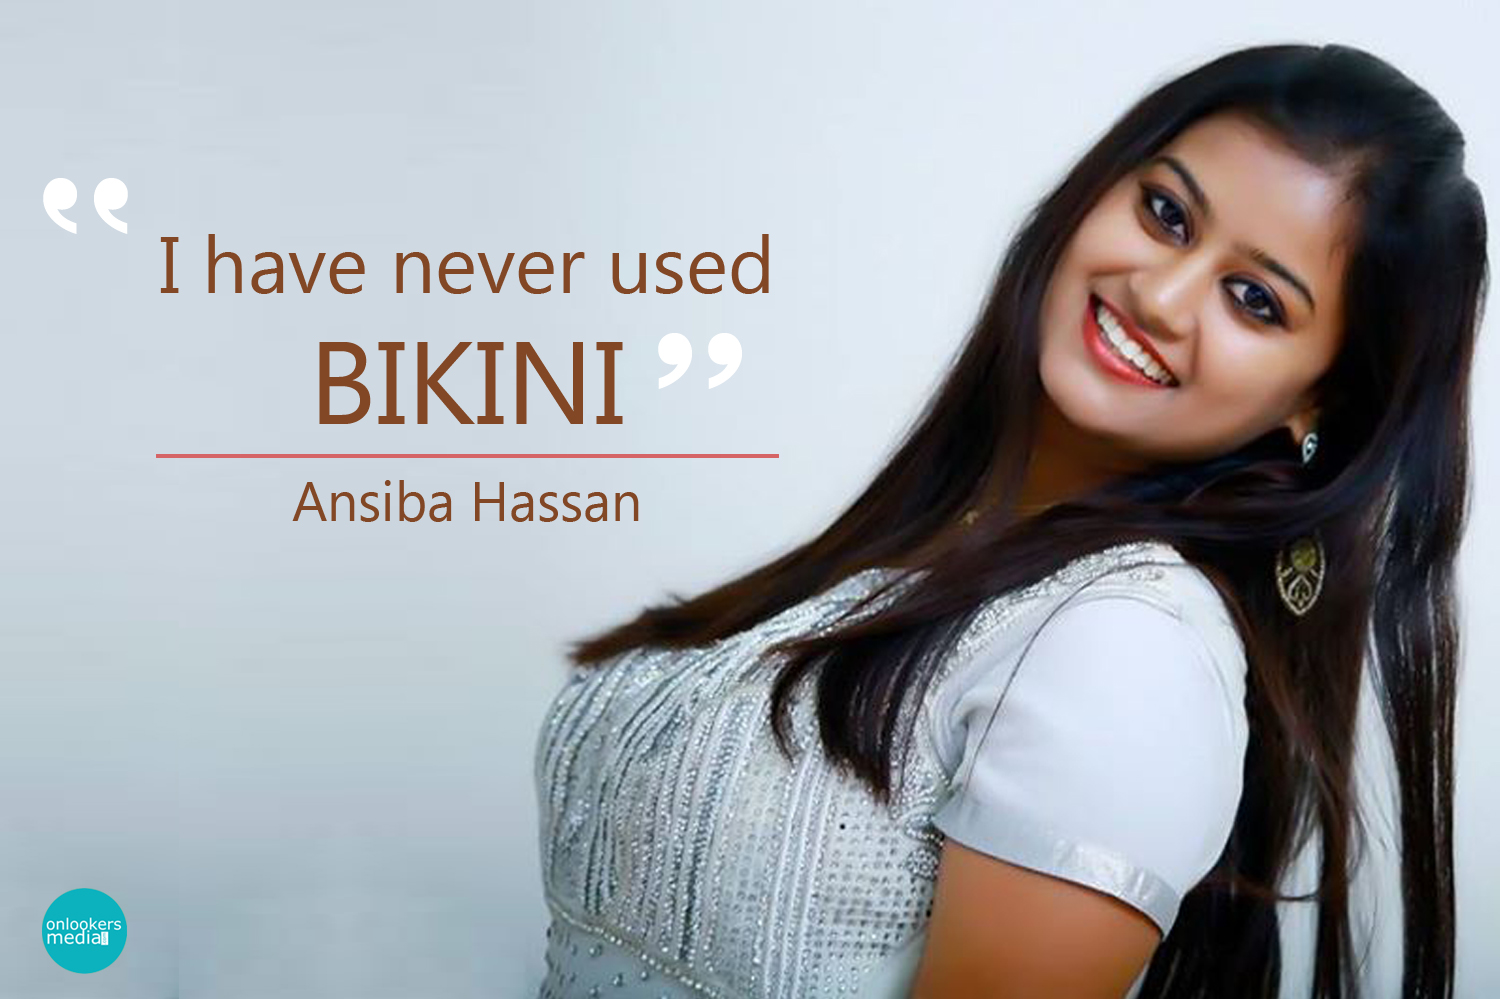 I have never used bikini, says Ansiba Hassan-Stills-Photos-Images-Videos-Onlookers Media